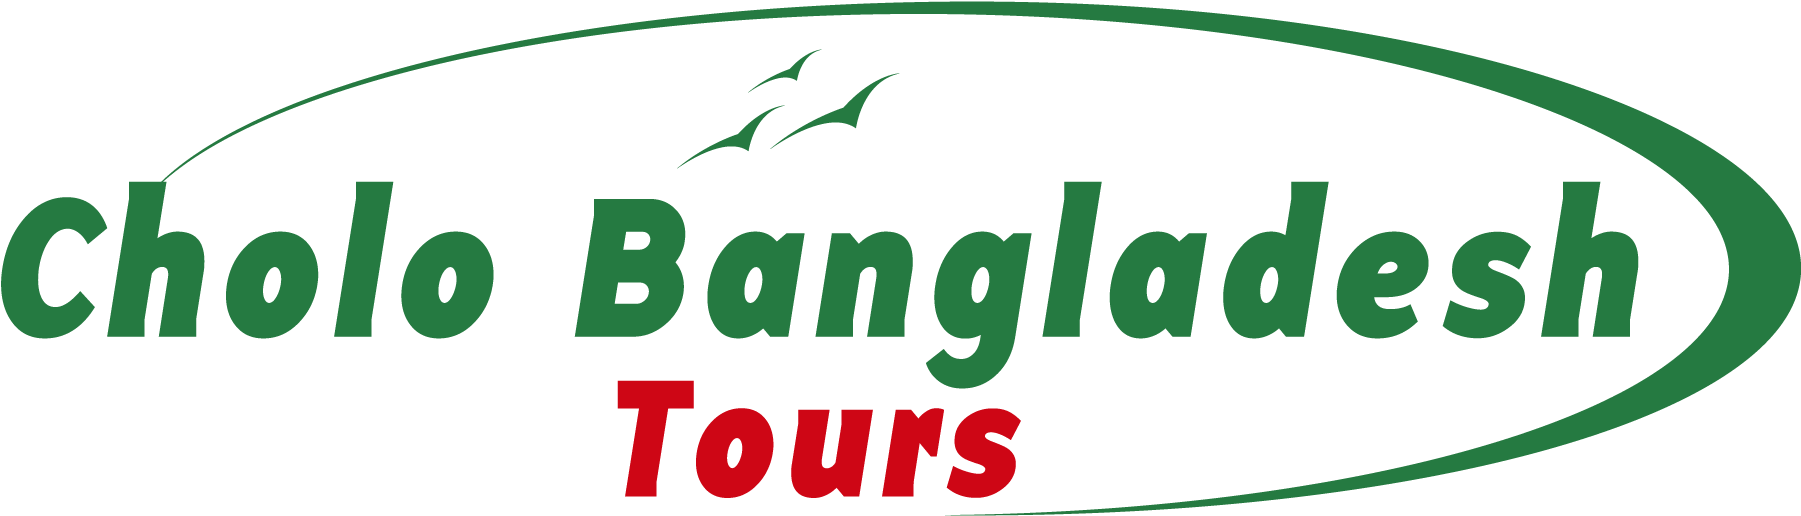 Cholo Bangladesh Tours - Graphic Design, Hd Png Download